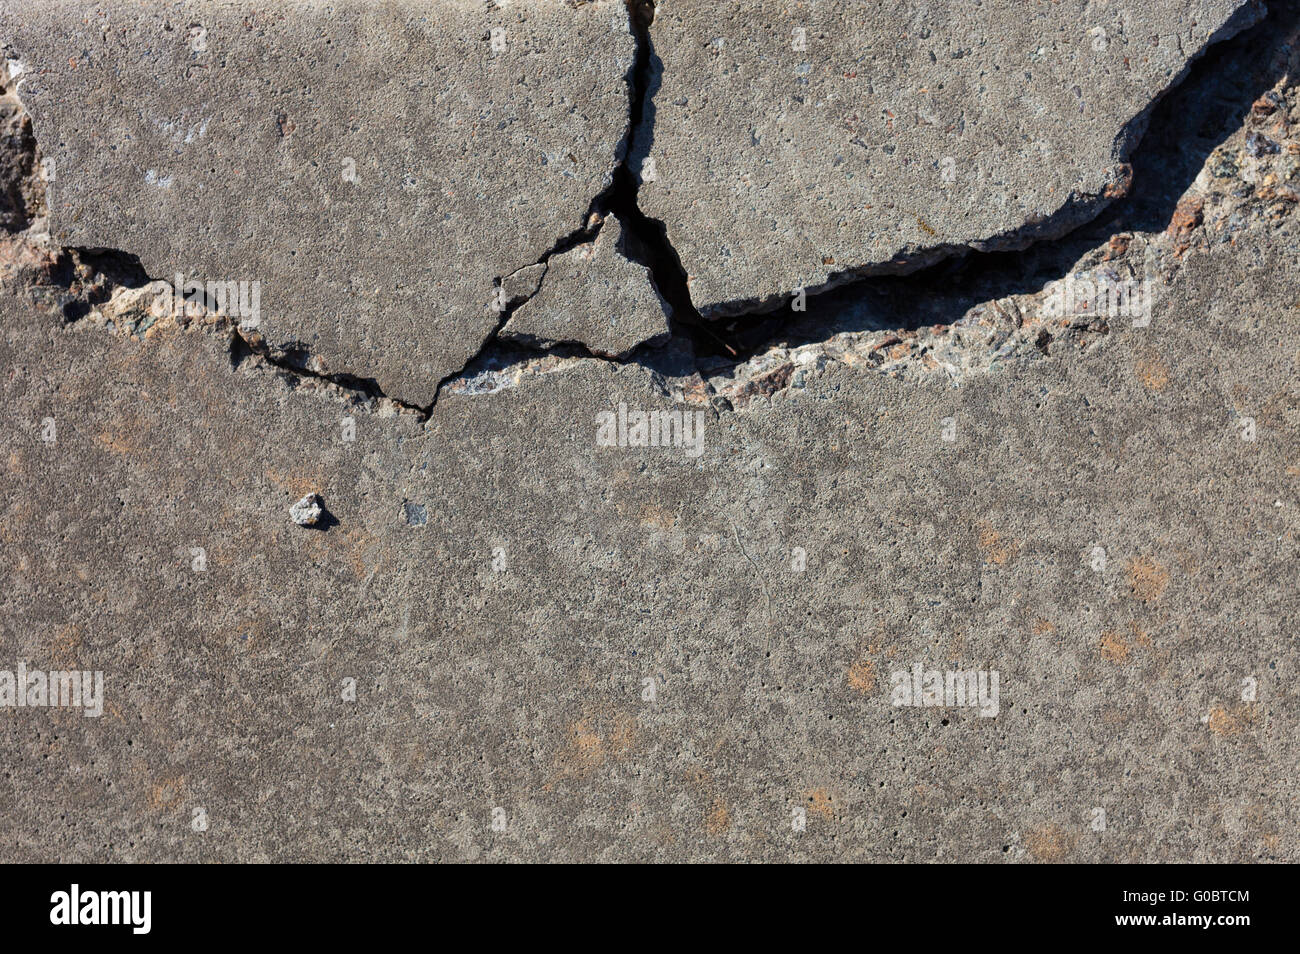 Cracked concrete surface Stock Photo